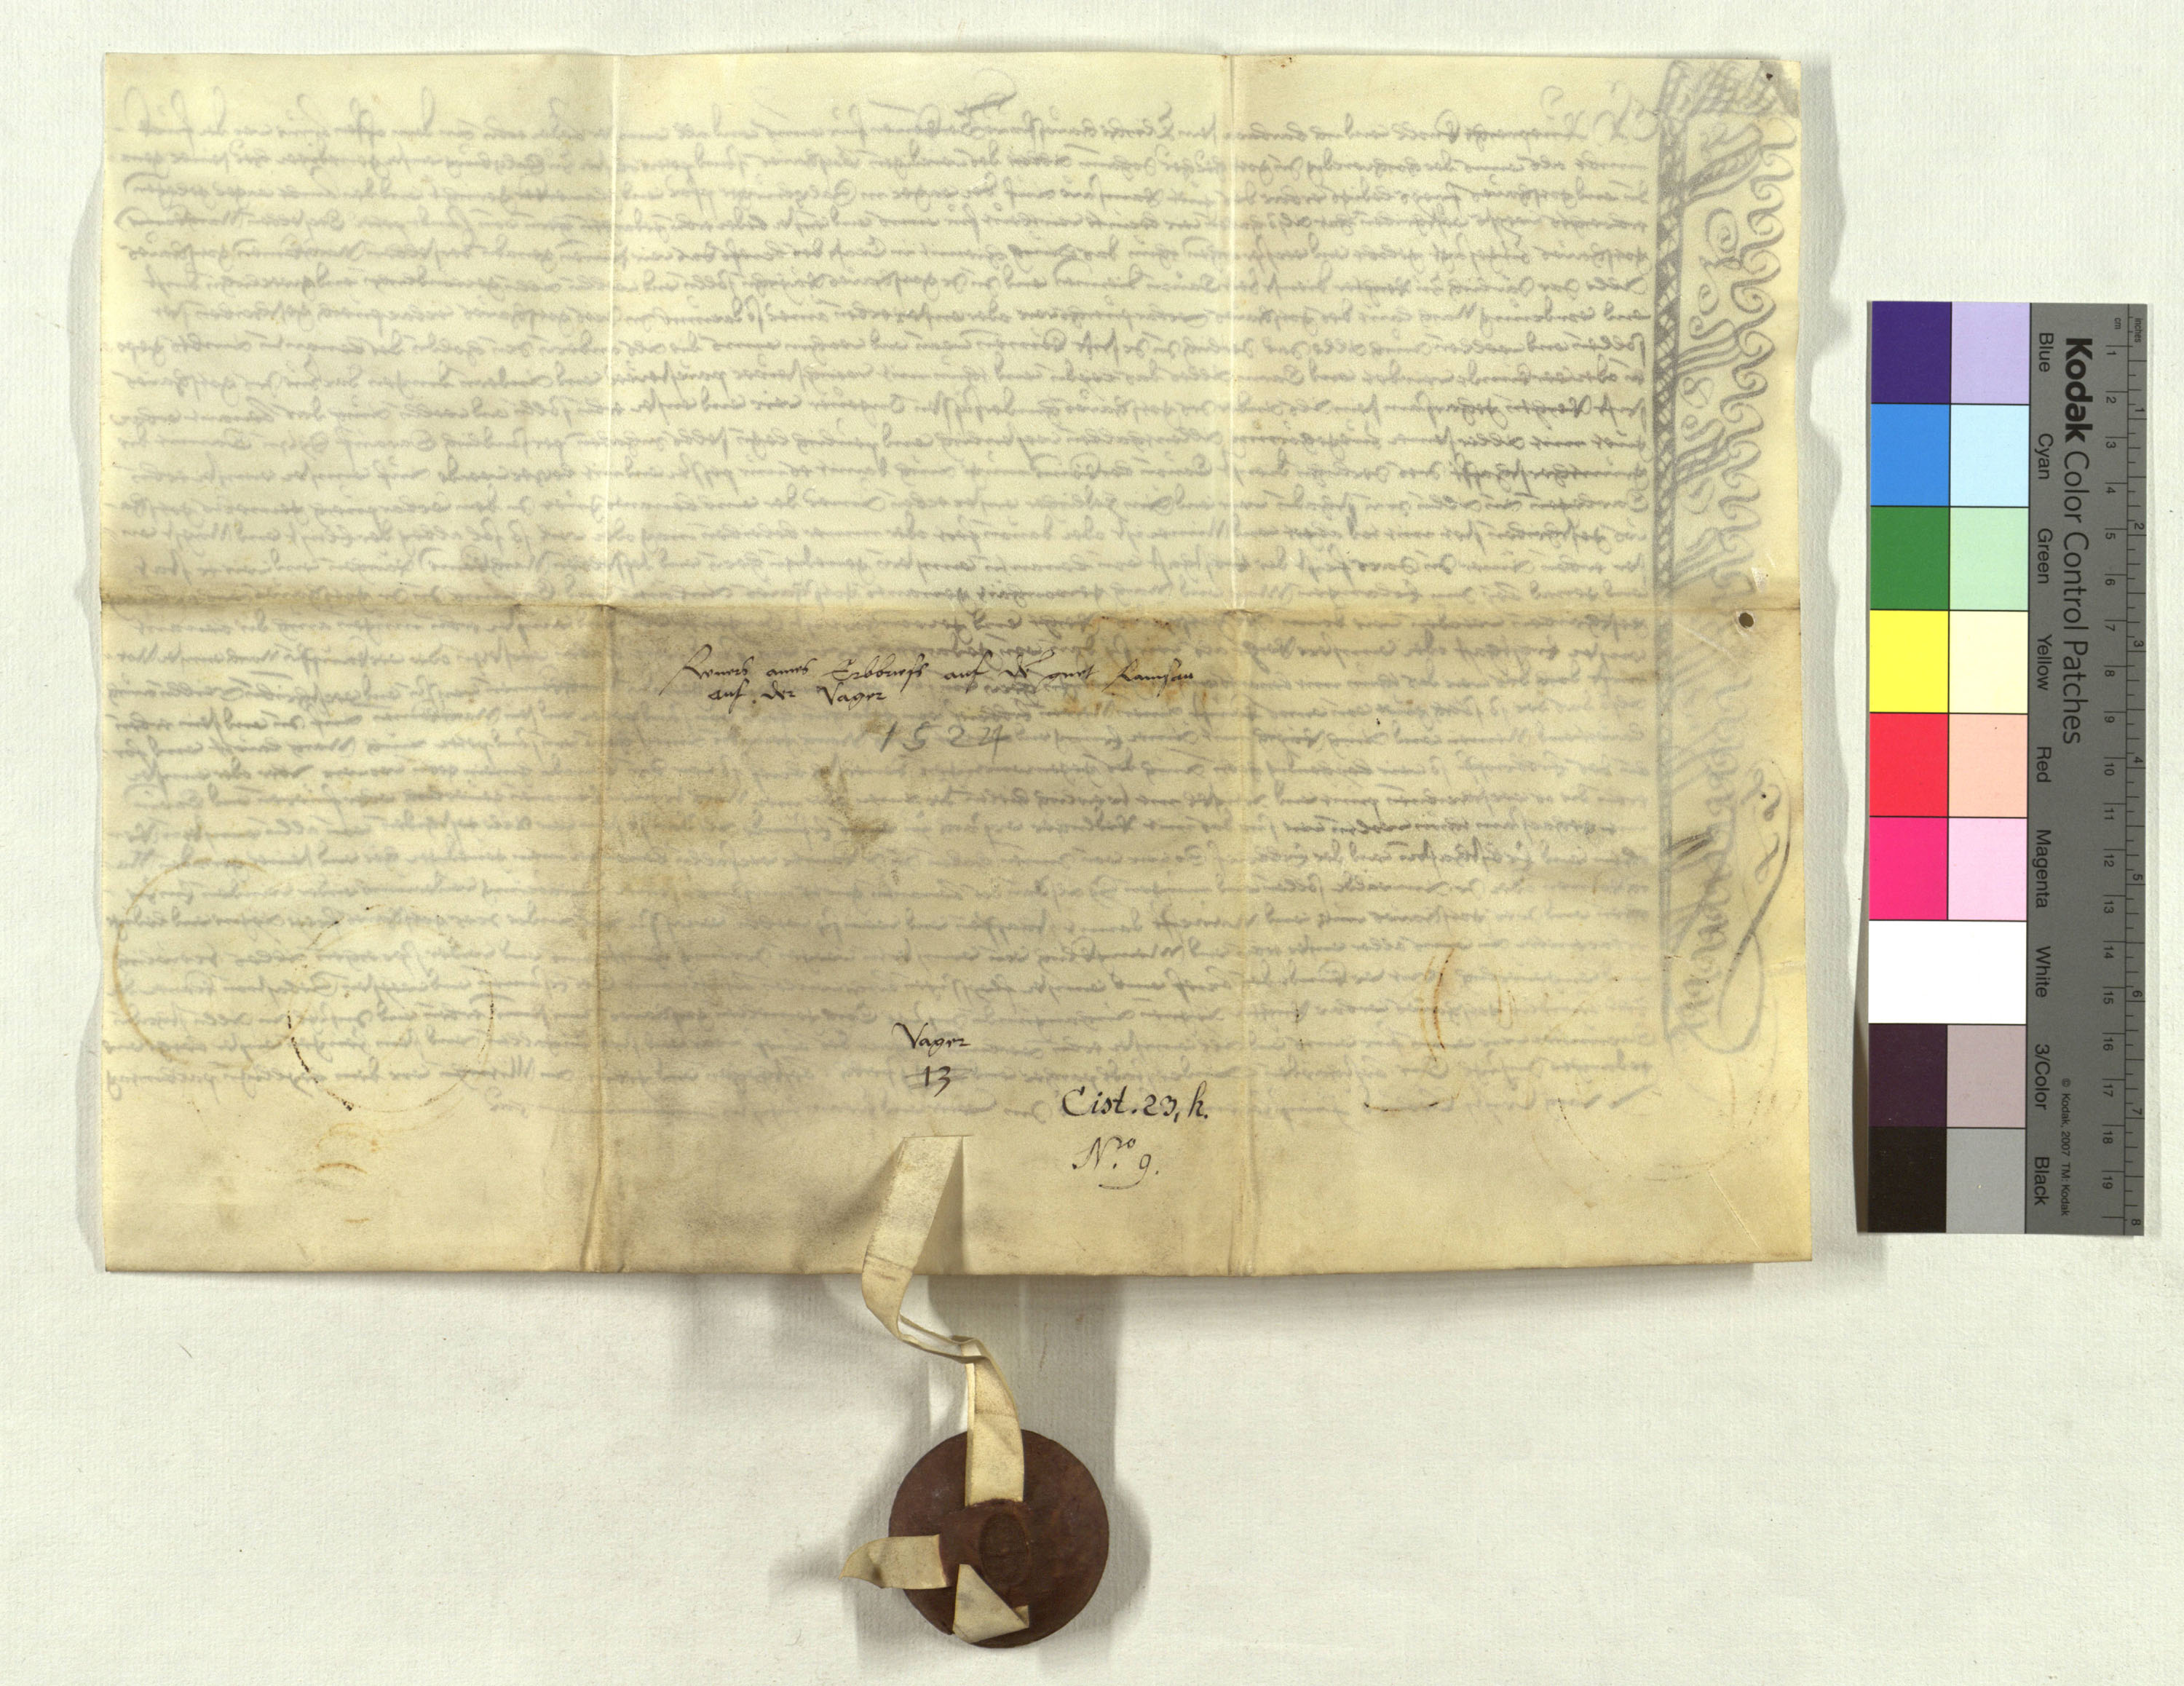 Charter AT-StiASP|Urkunden|Urk_Nr_2021-1524_III_16 - Monasterium.net